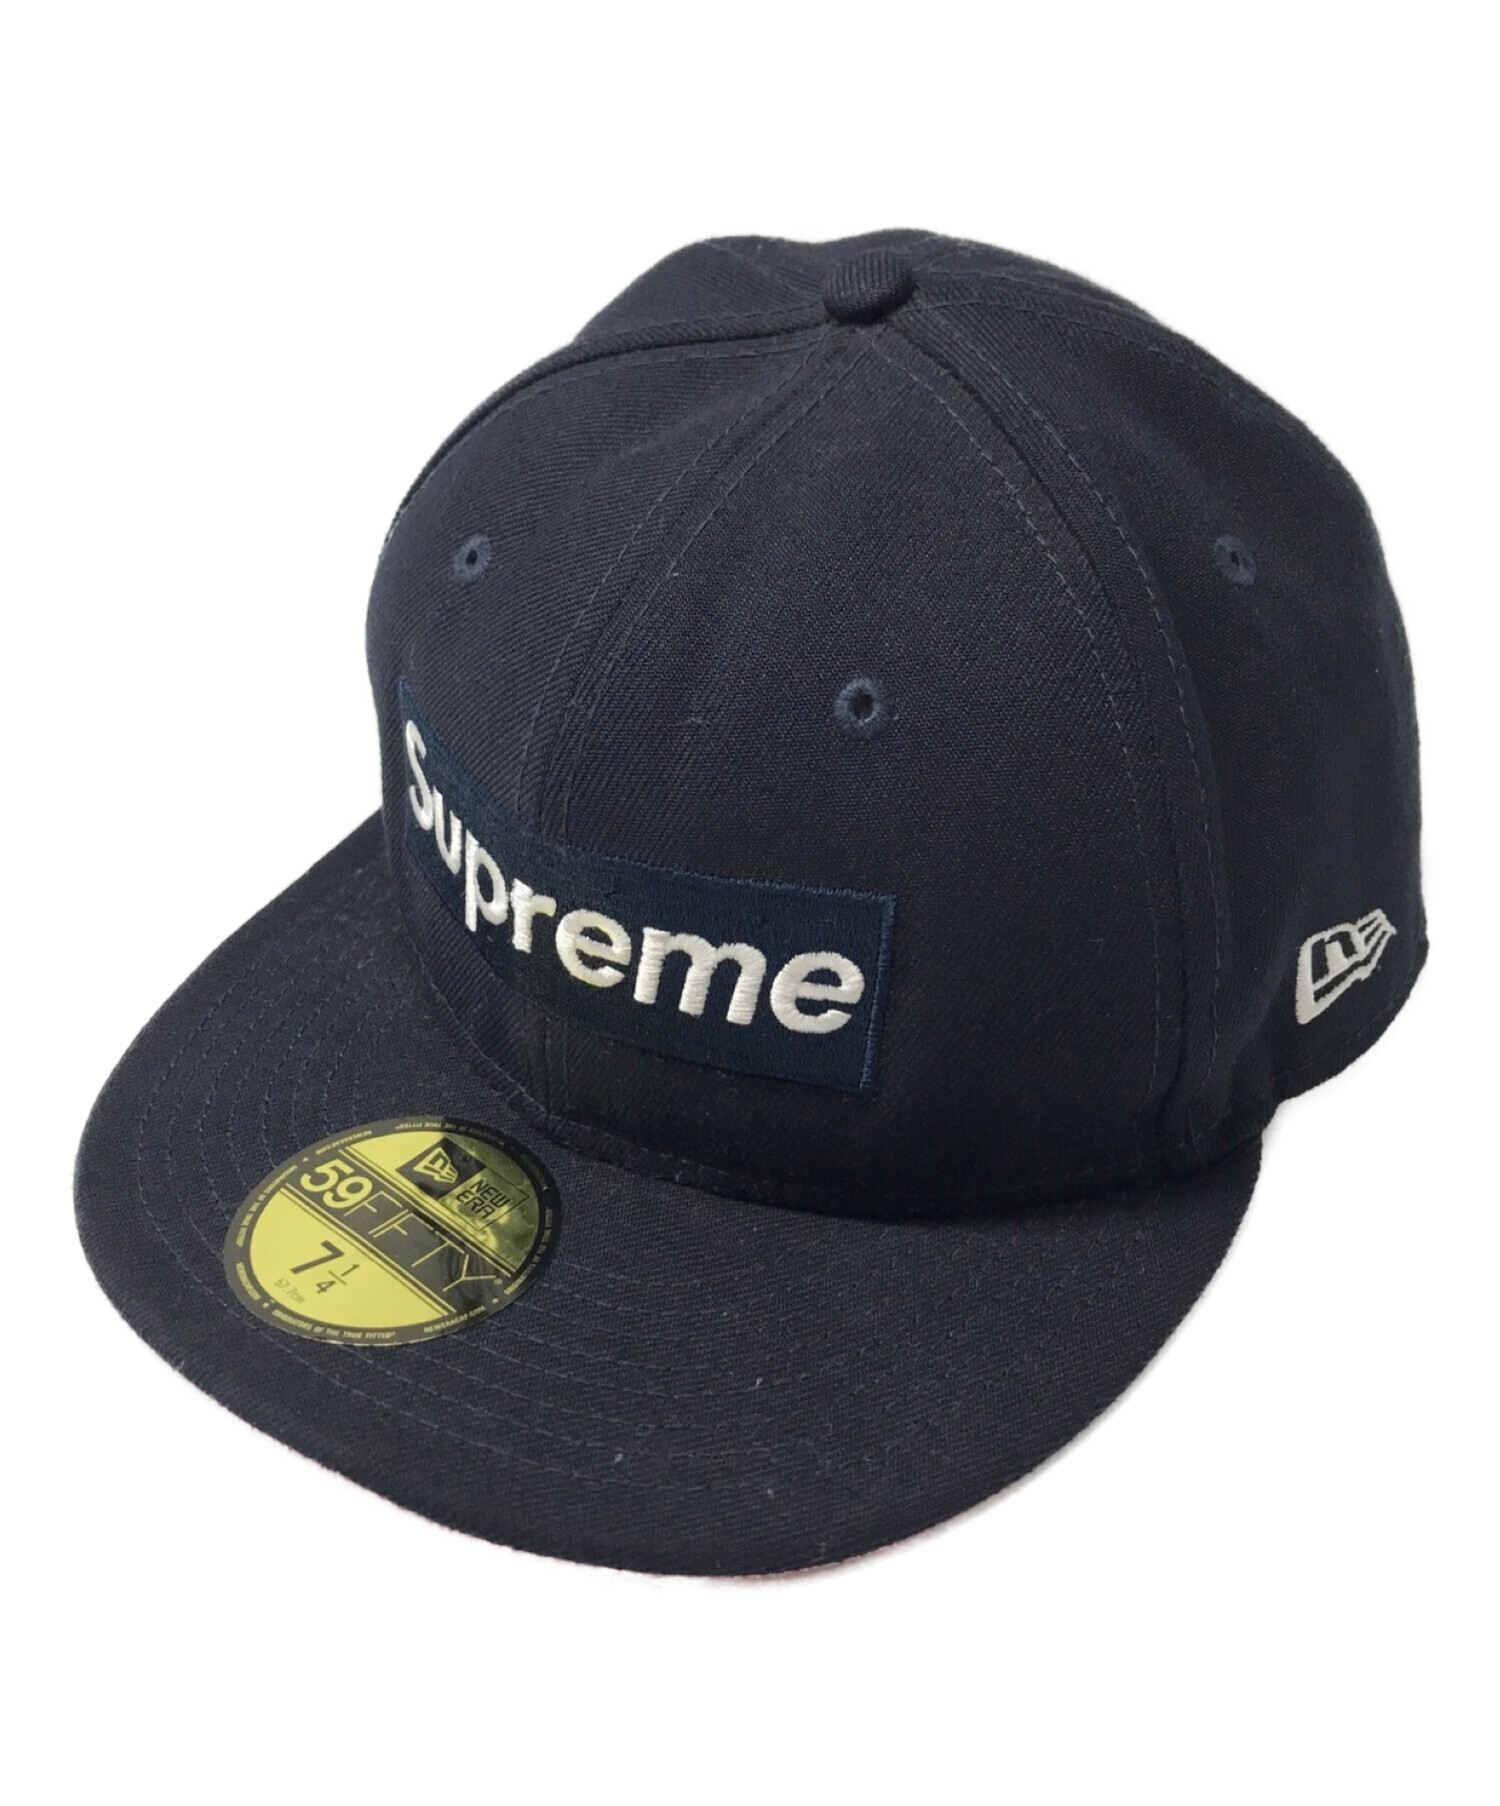 Supreme S logo New era cap  Black 7 3/8キャップ